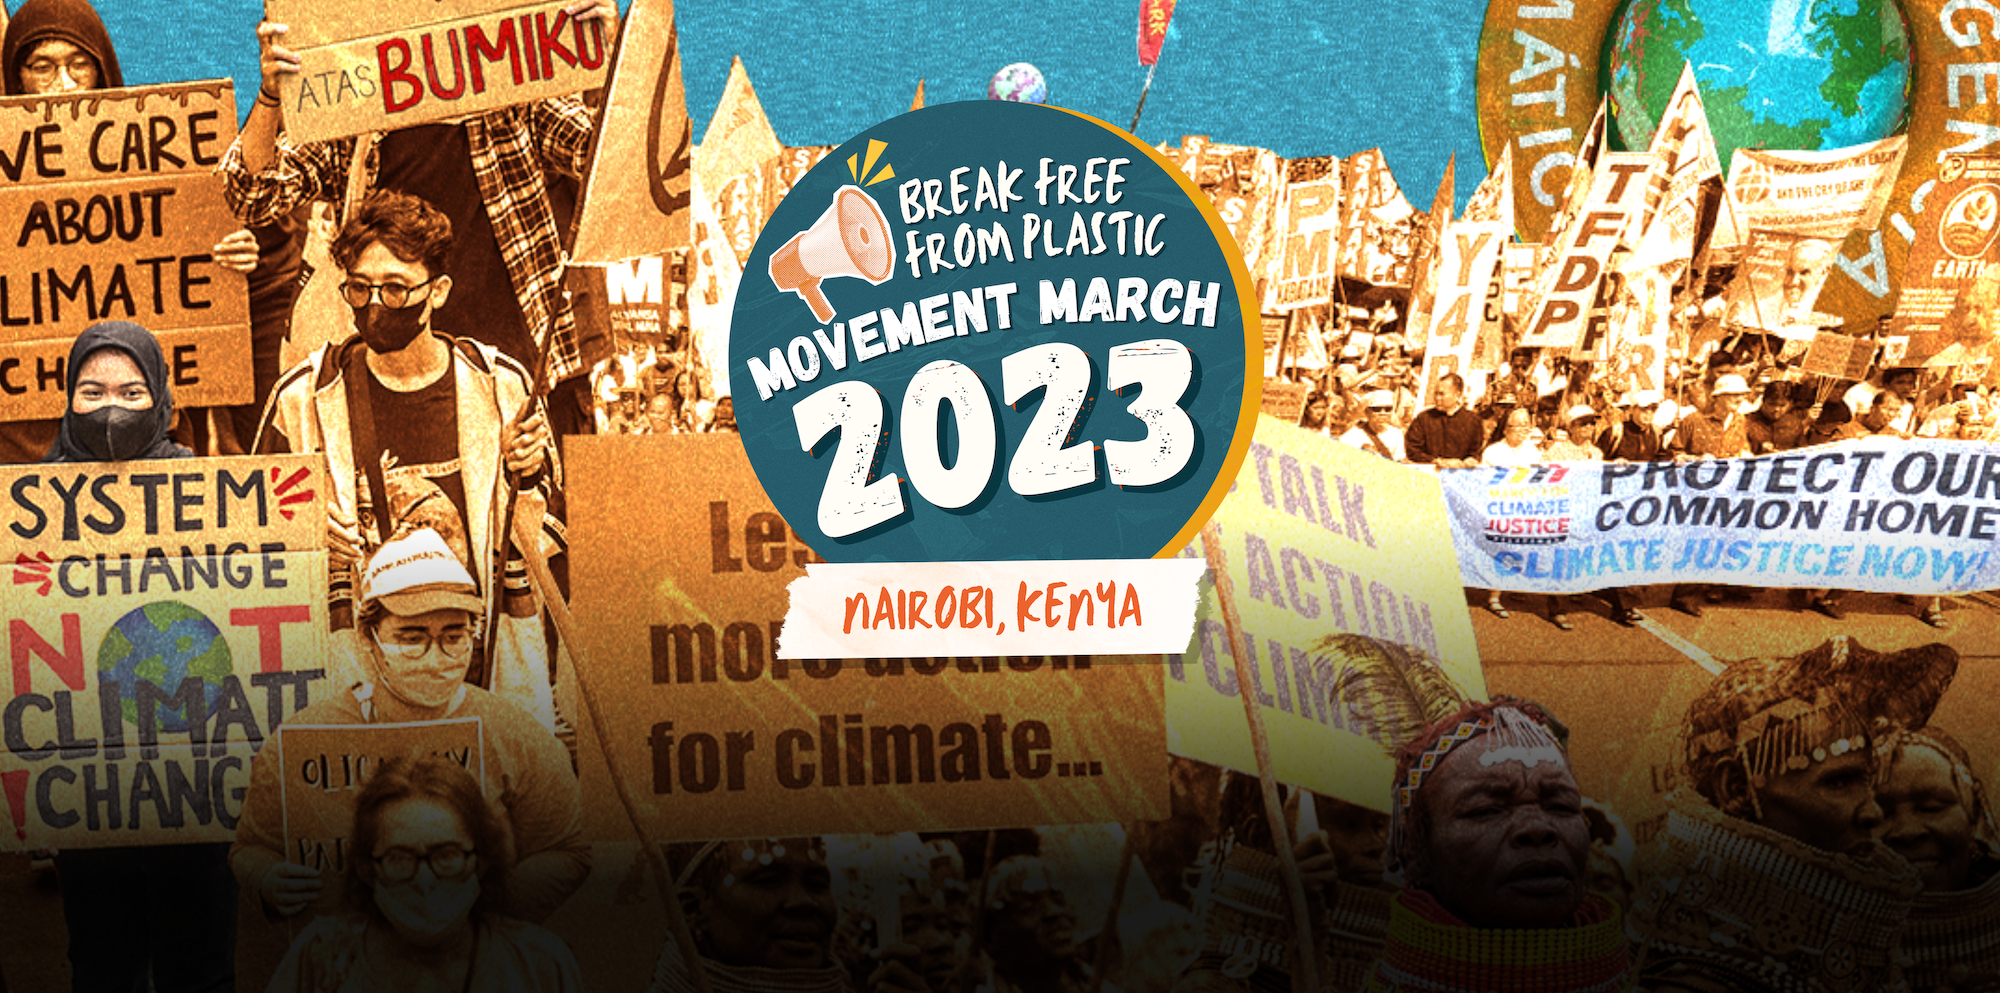 Break Free From Plastic Movement March 2023 in Nairobi, Kenya